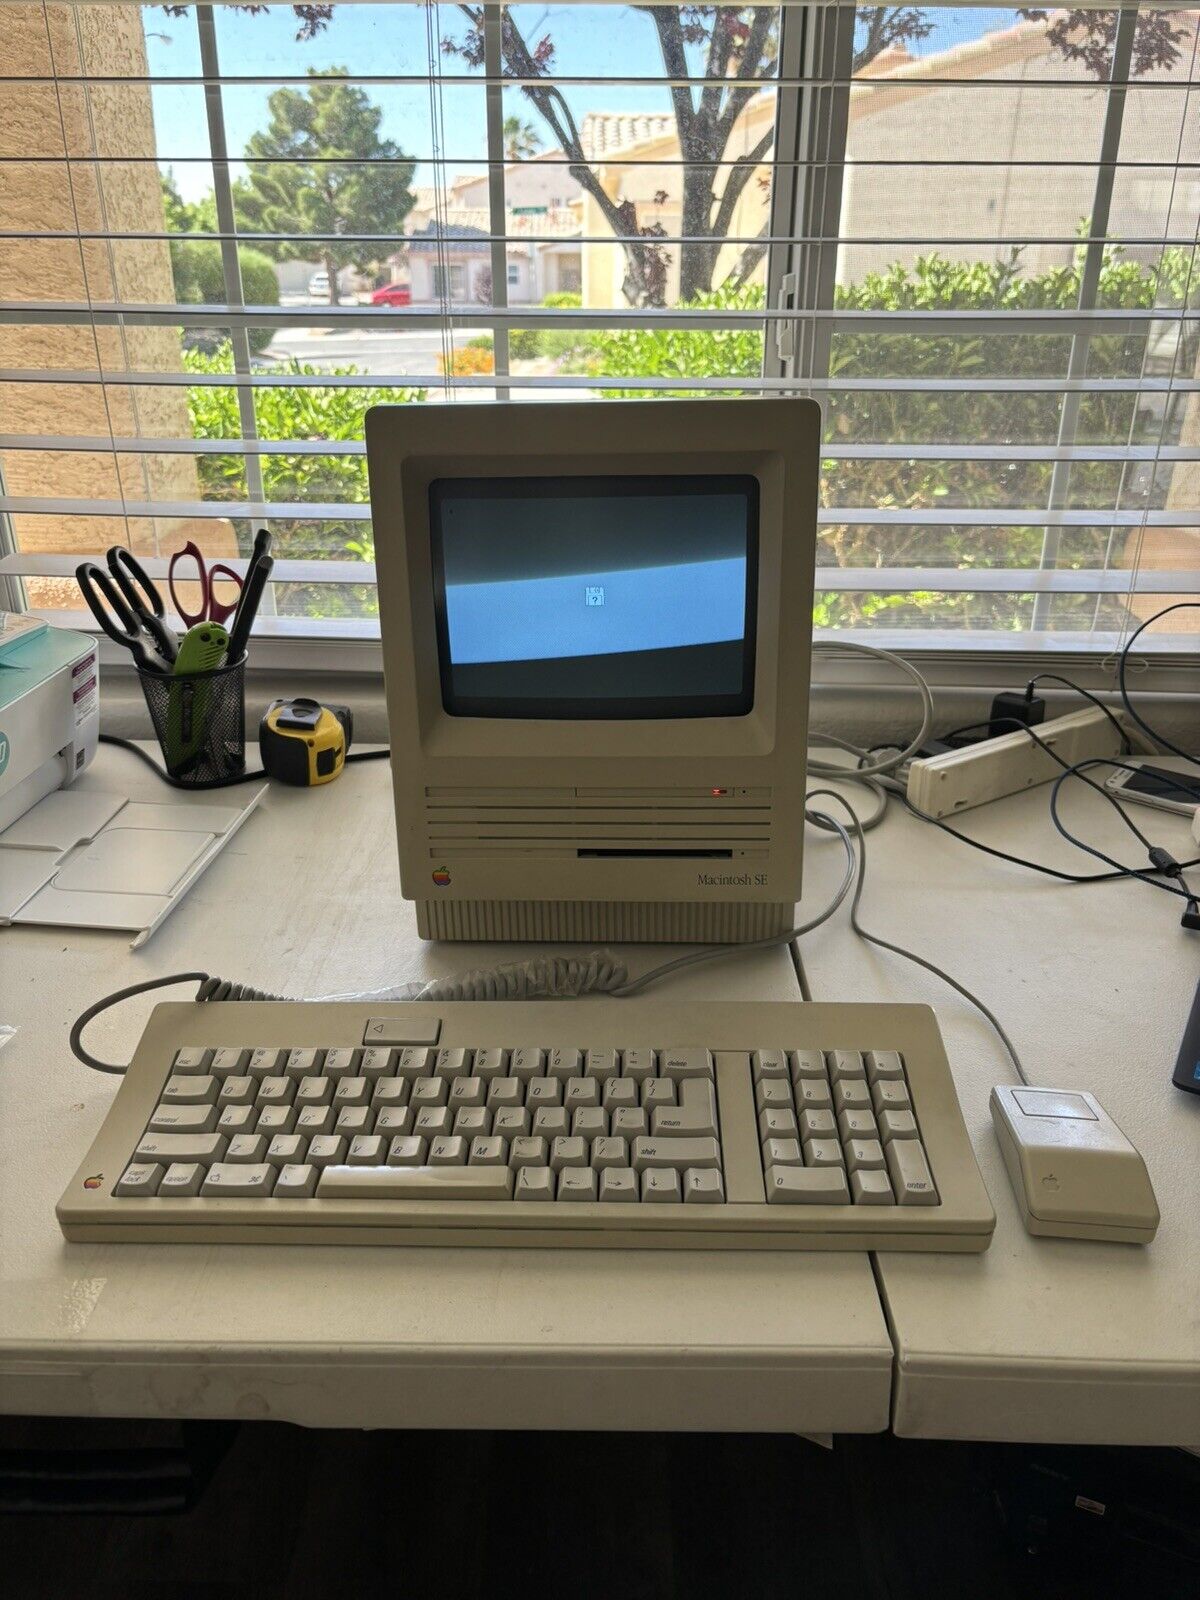 Apple Macintosh M5011 1 Mbyte RAM, 800k Drive 20 SC Hard Drive - Computer (1986)